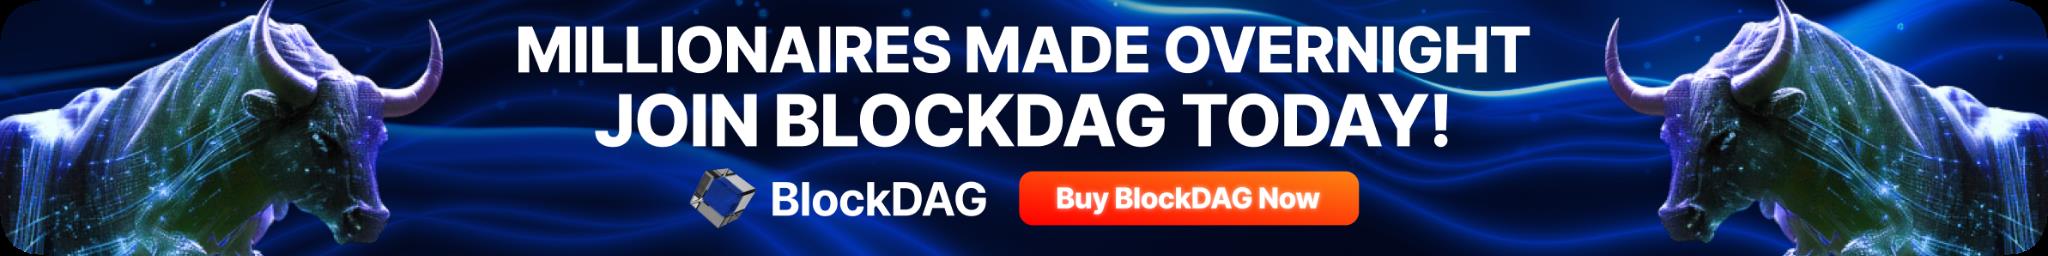 BlockDAG PR-5